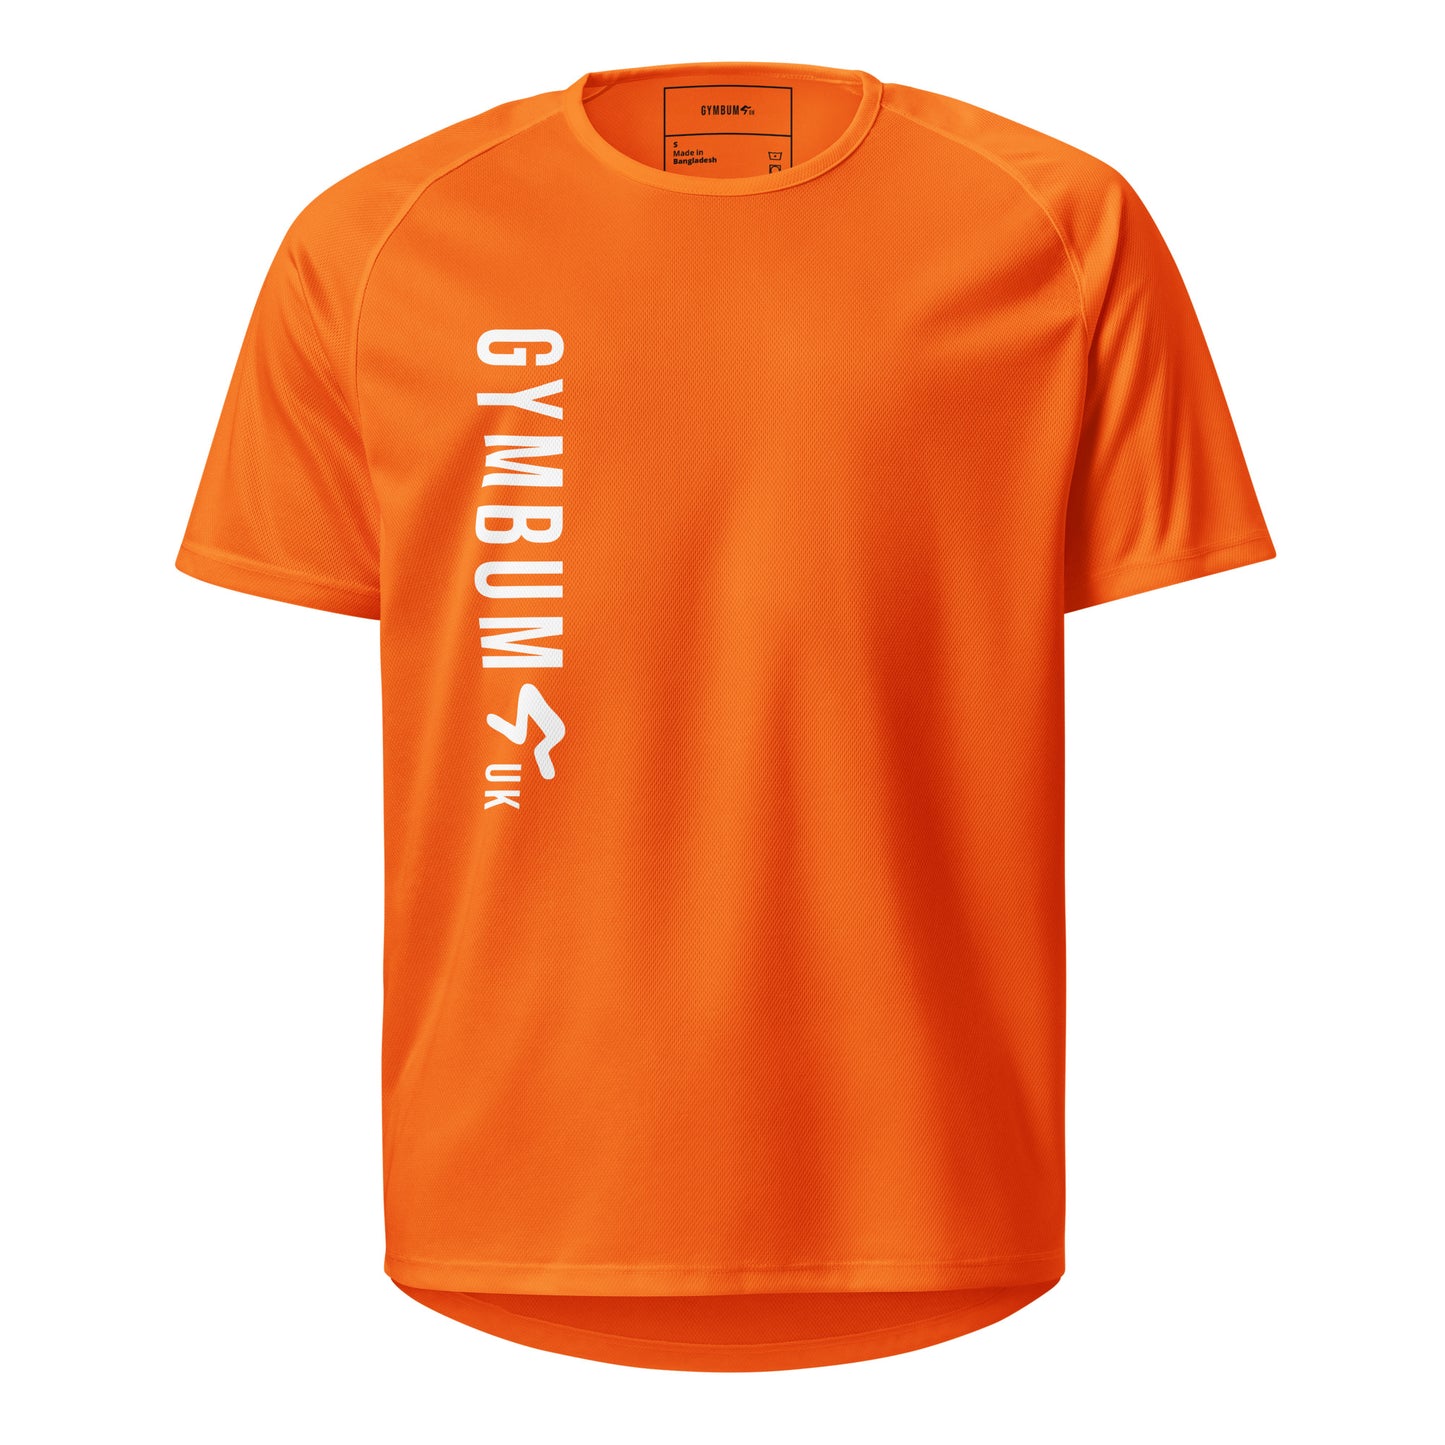 The GymbumUK Long Logo Flex QuickDry Performance T-Shirt